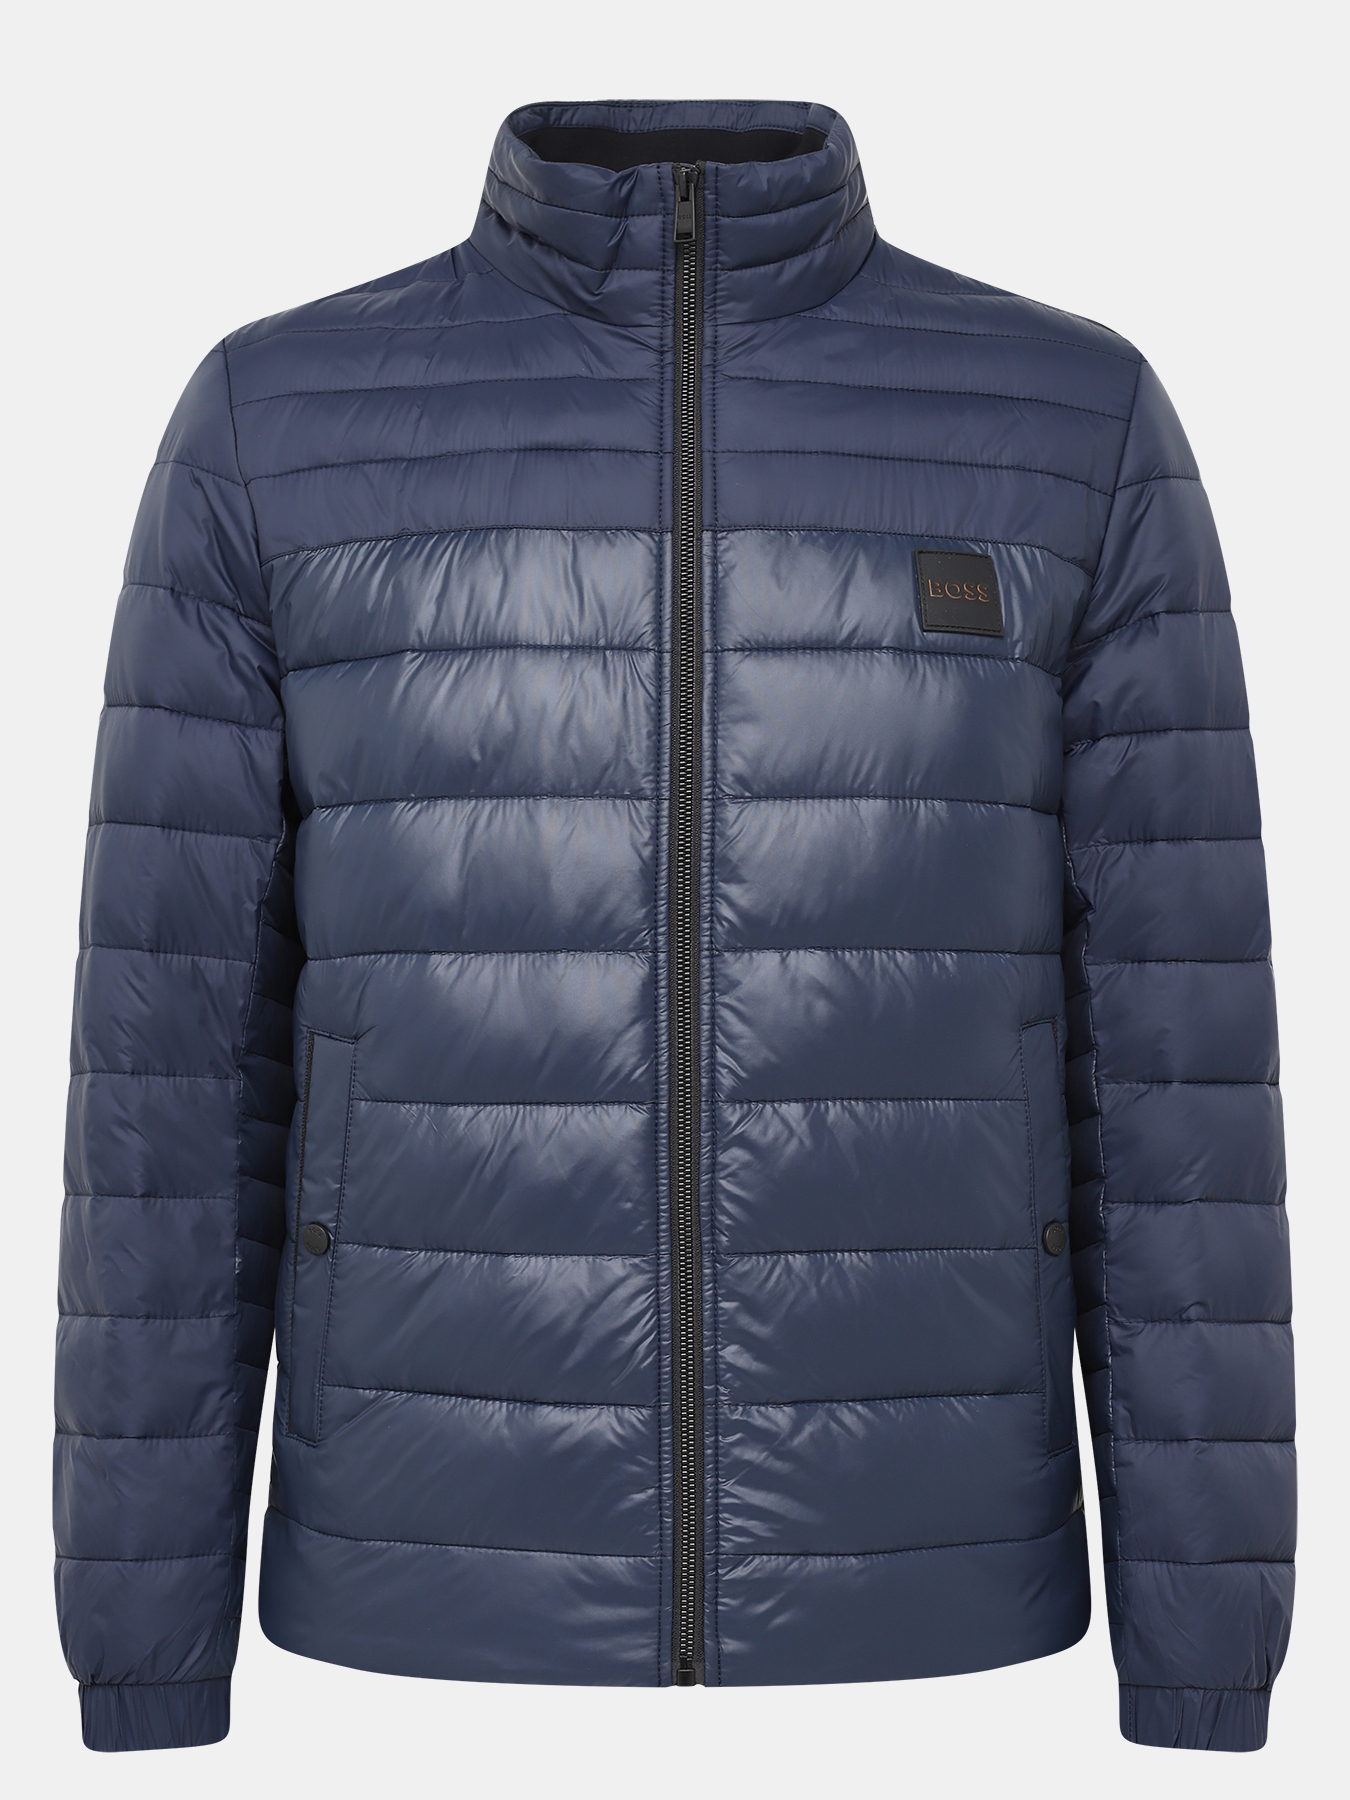 Куртка Oden BOSS 420447-025, цвет синий, размер 48